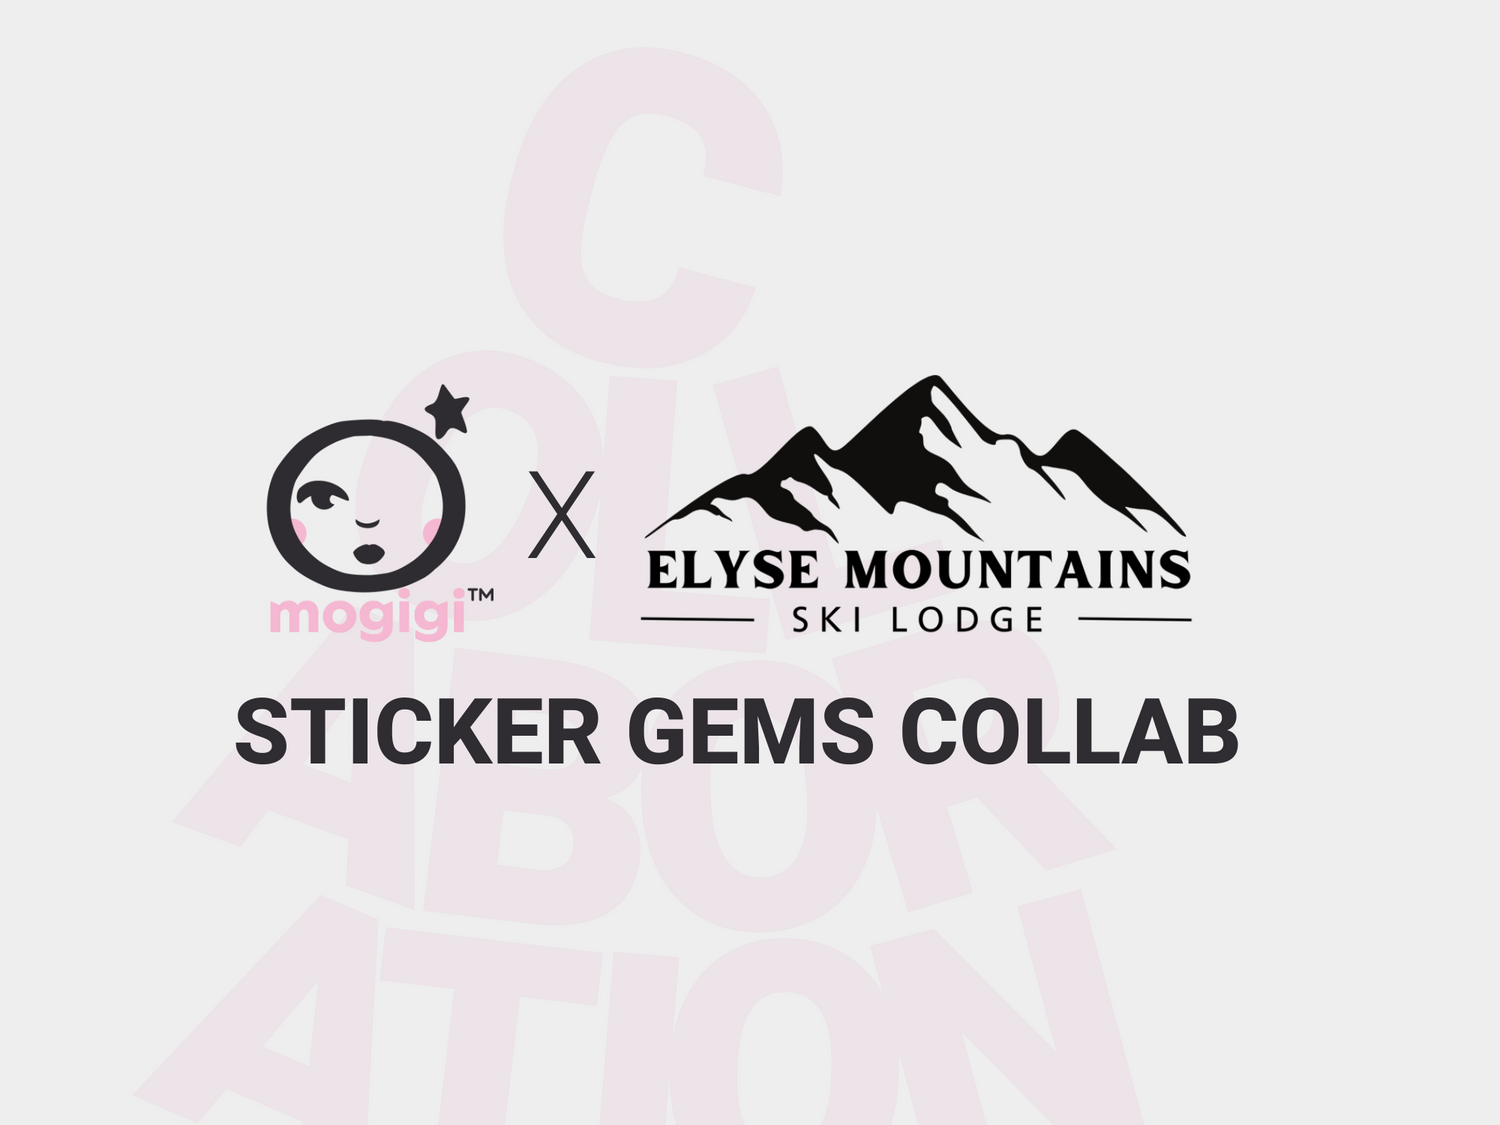 elyse mountains and mogigi sticker gems collaboration